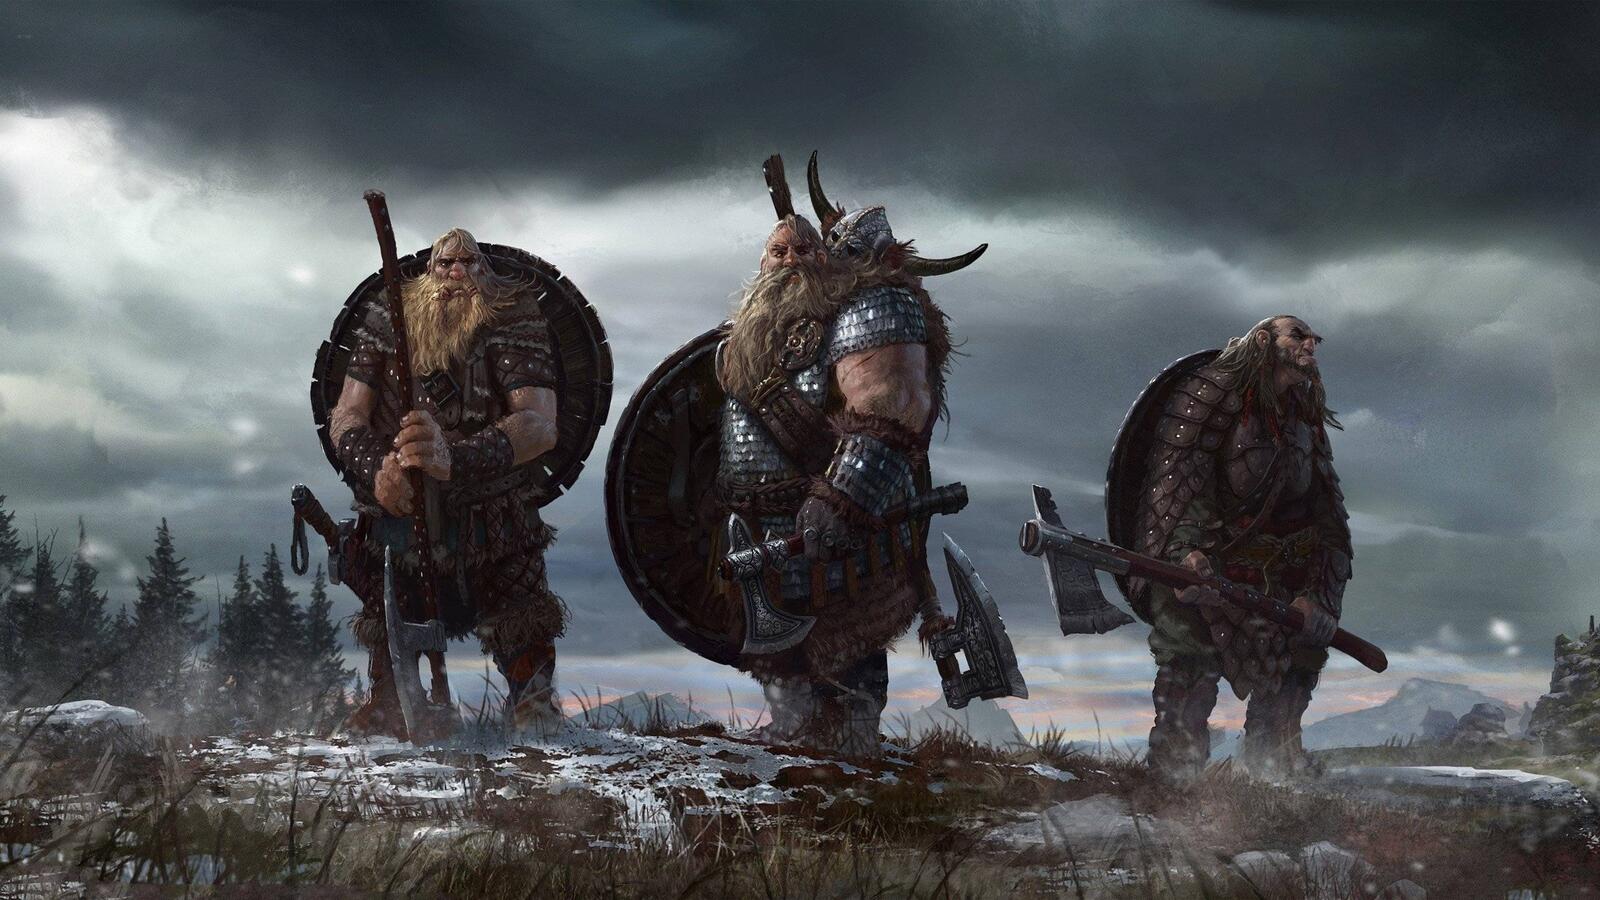 Wallpapers Vikings weapons shields on the desktop